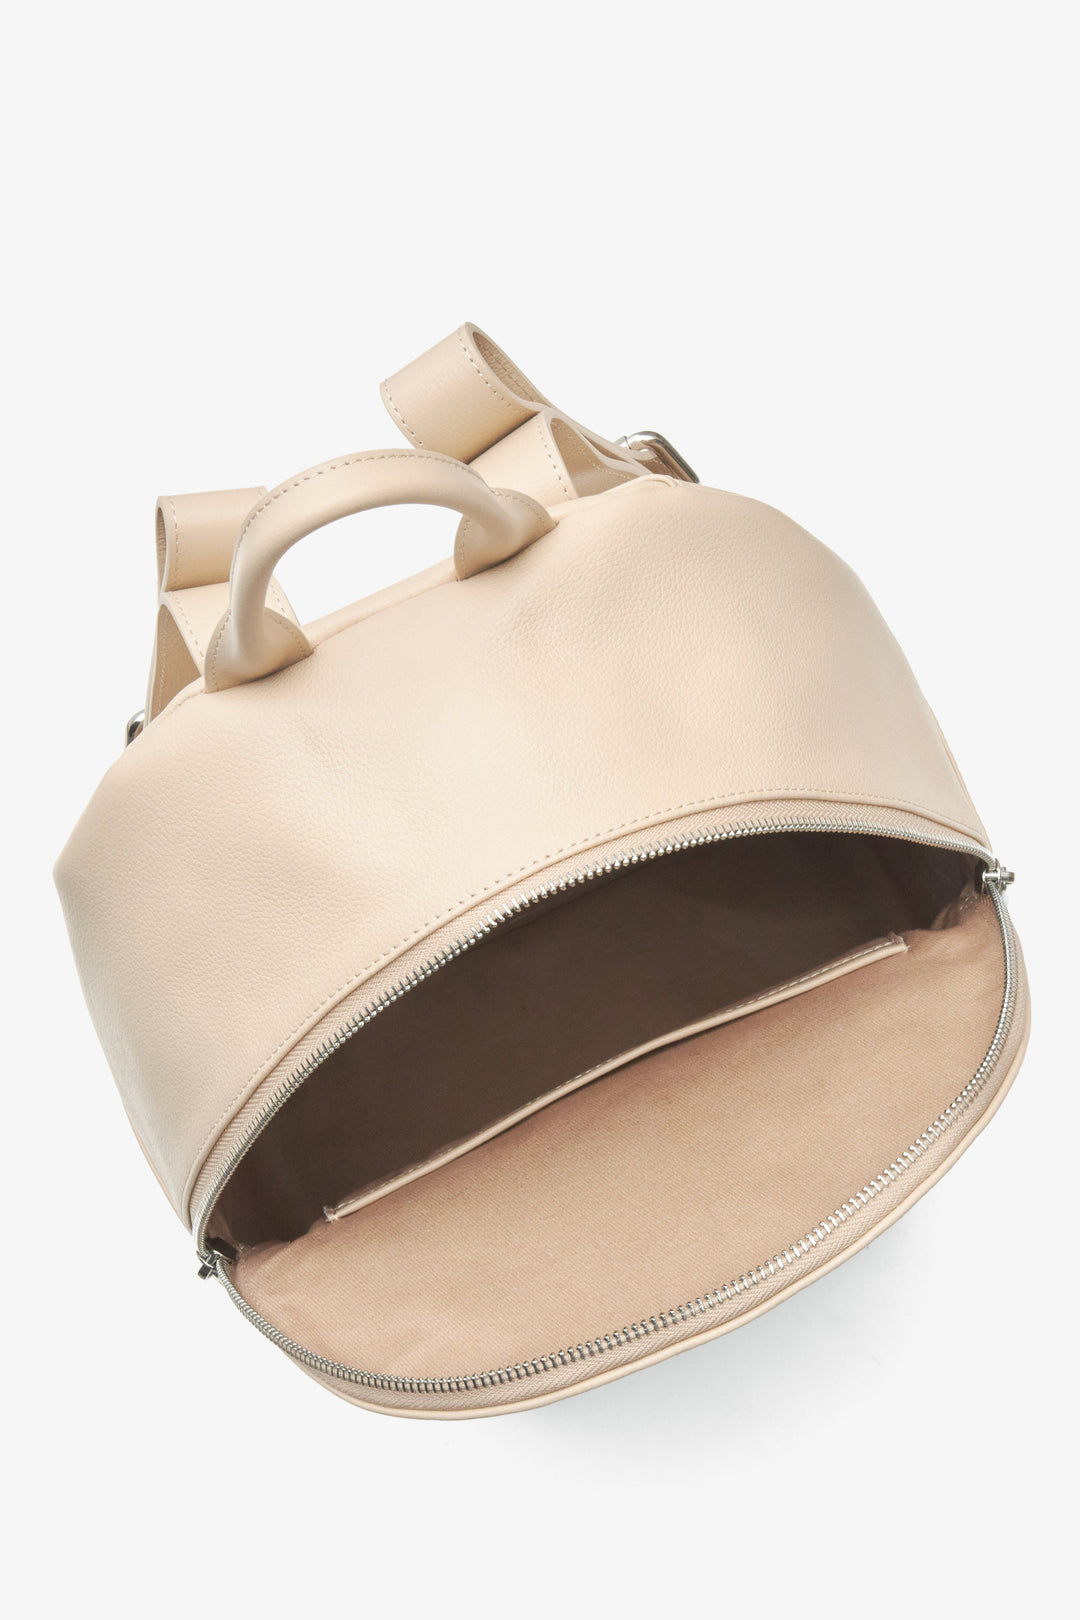 Women's light beige Estro backpack - close-up on interior.